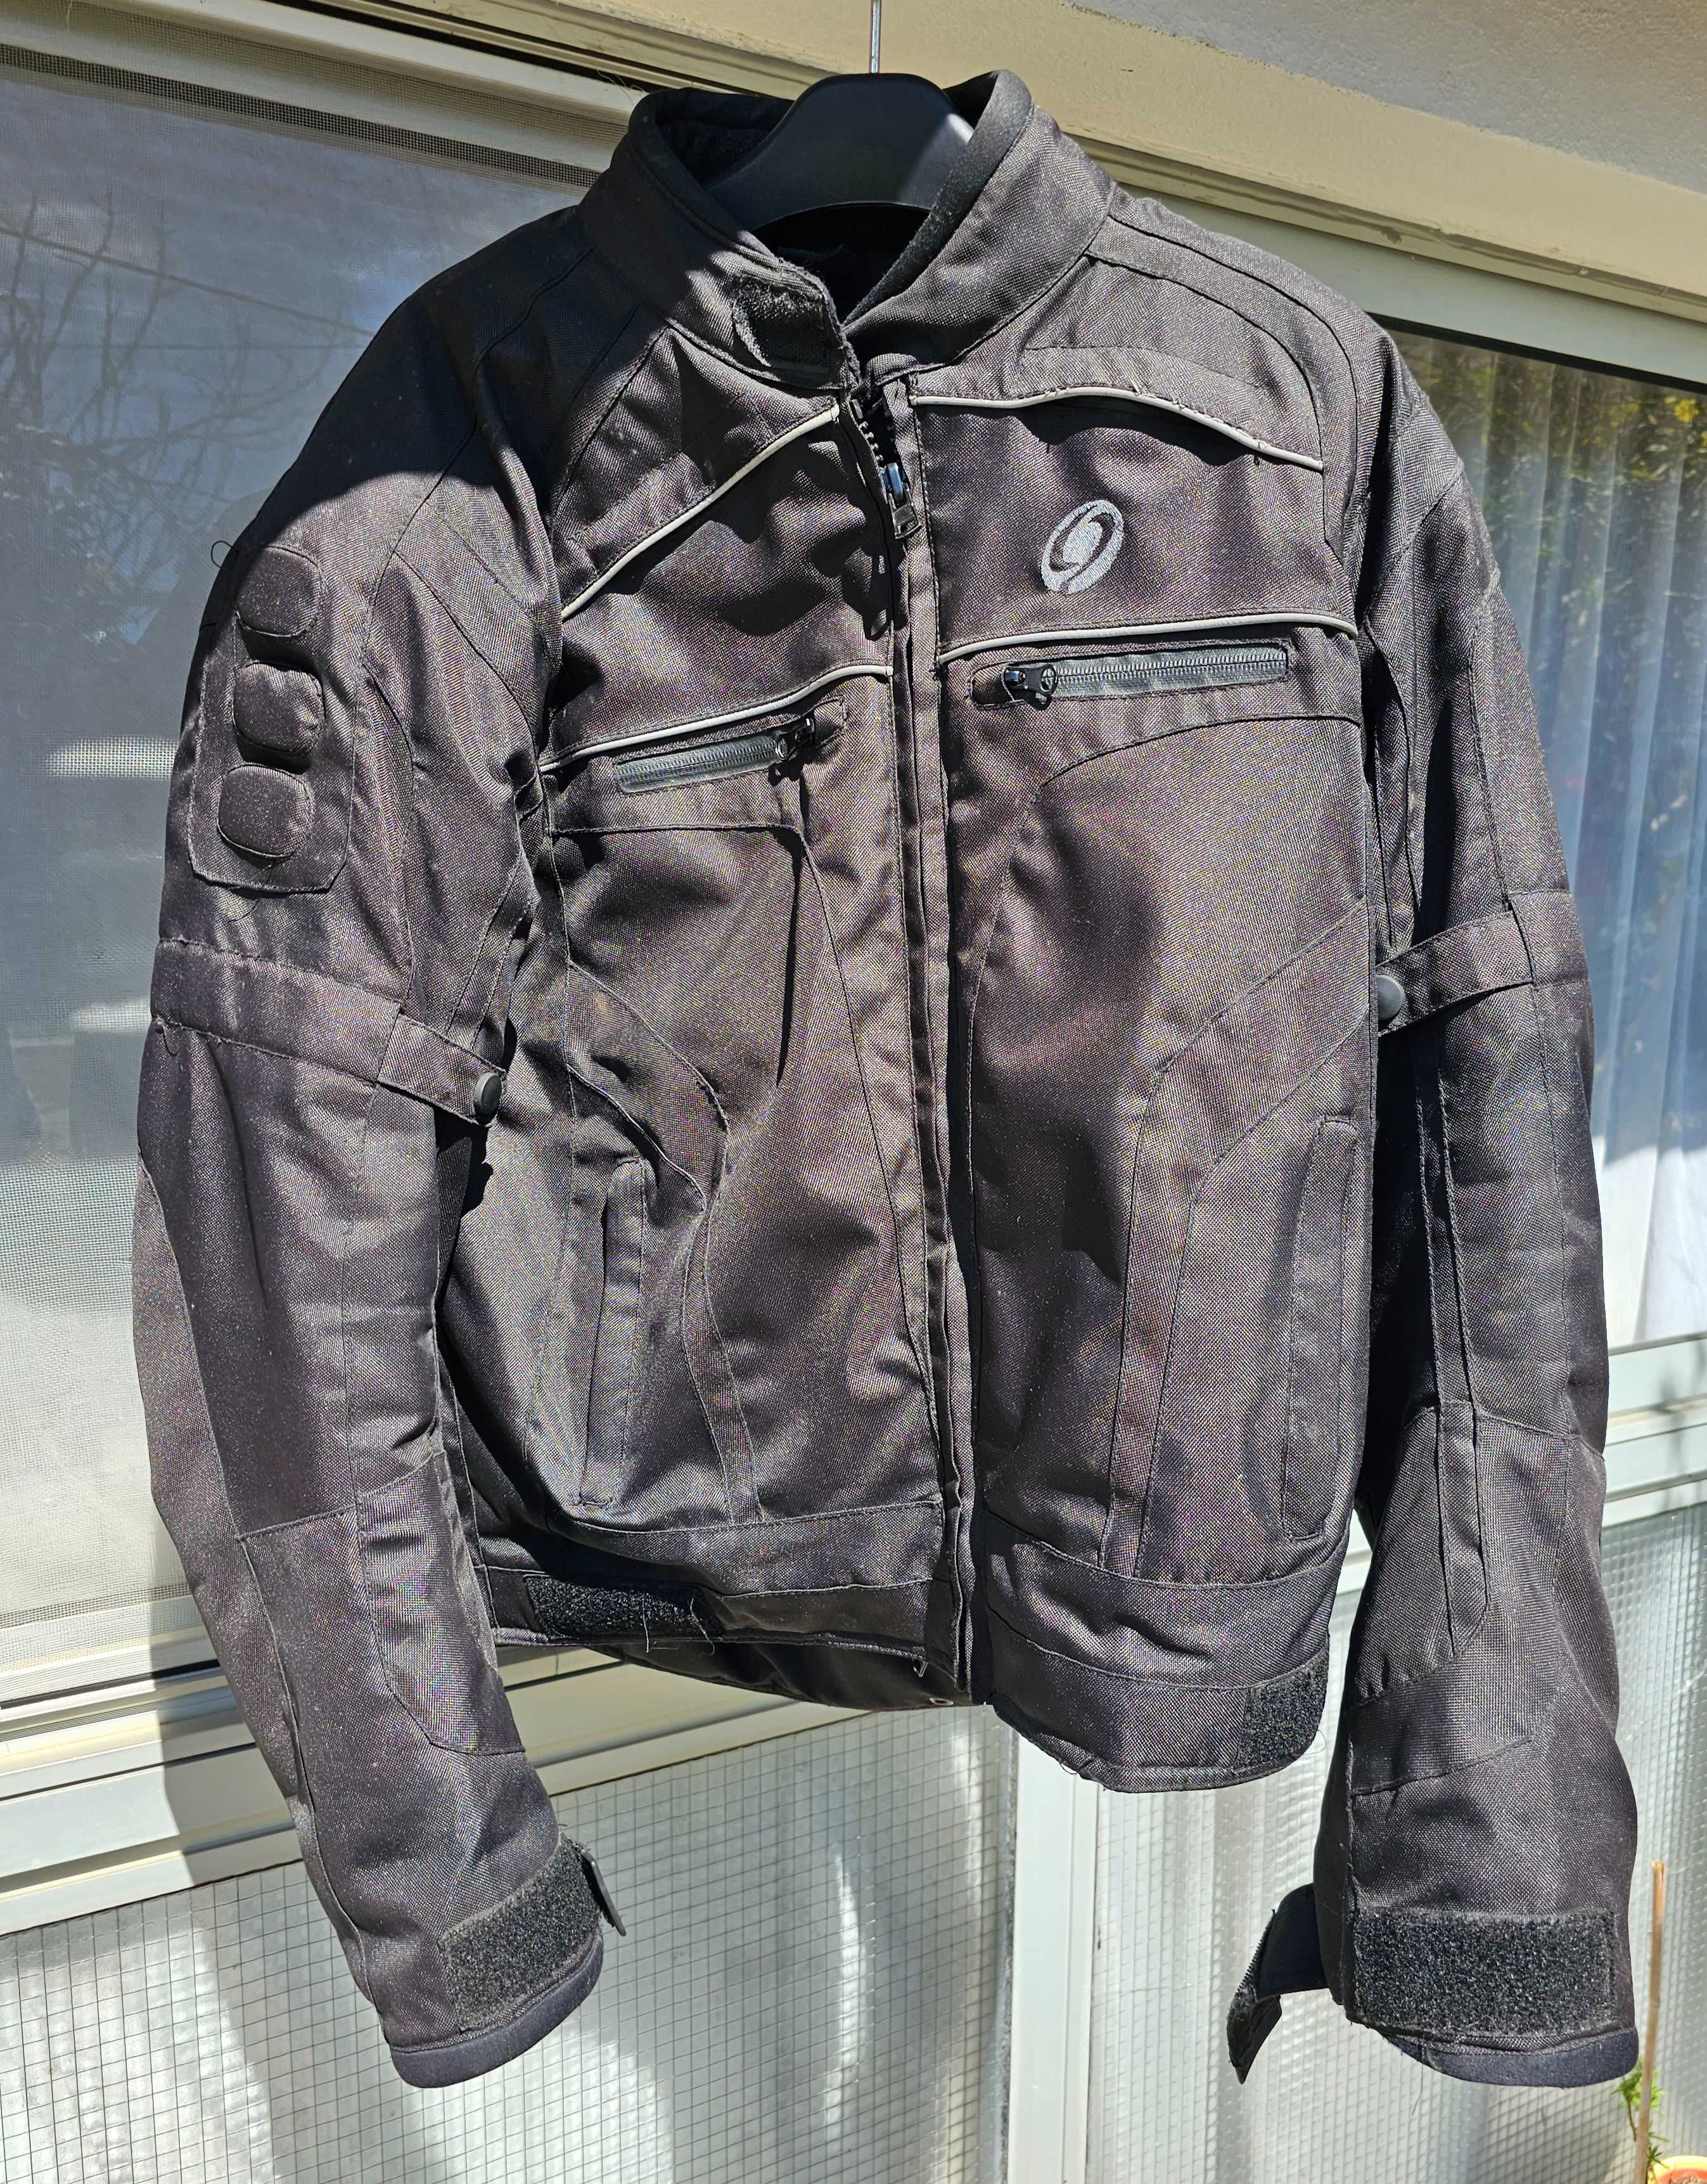 Motard jacket. Blusão Terrain em Polyester com forro térmico removível